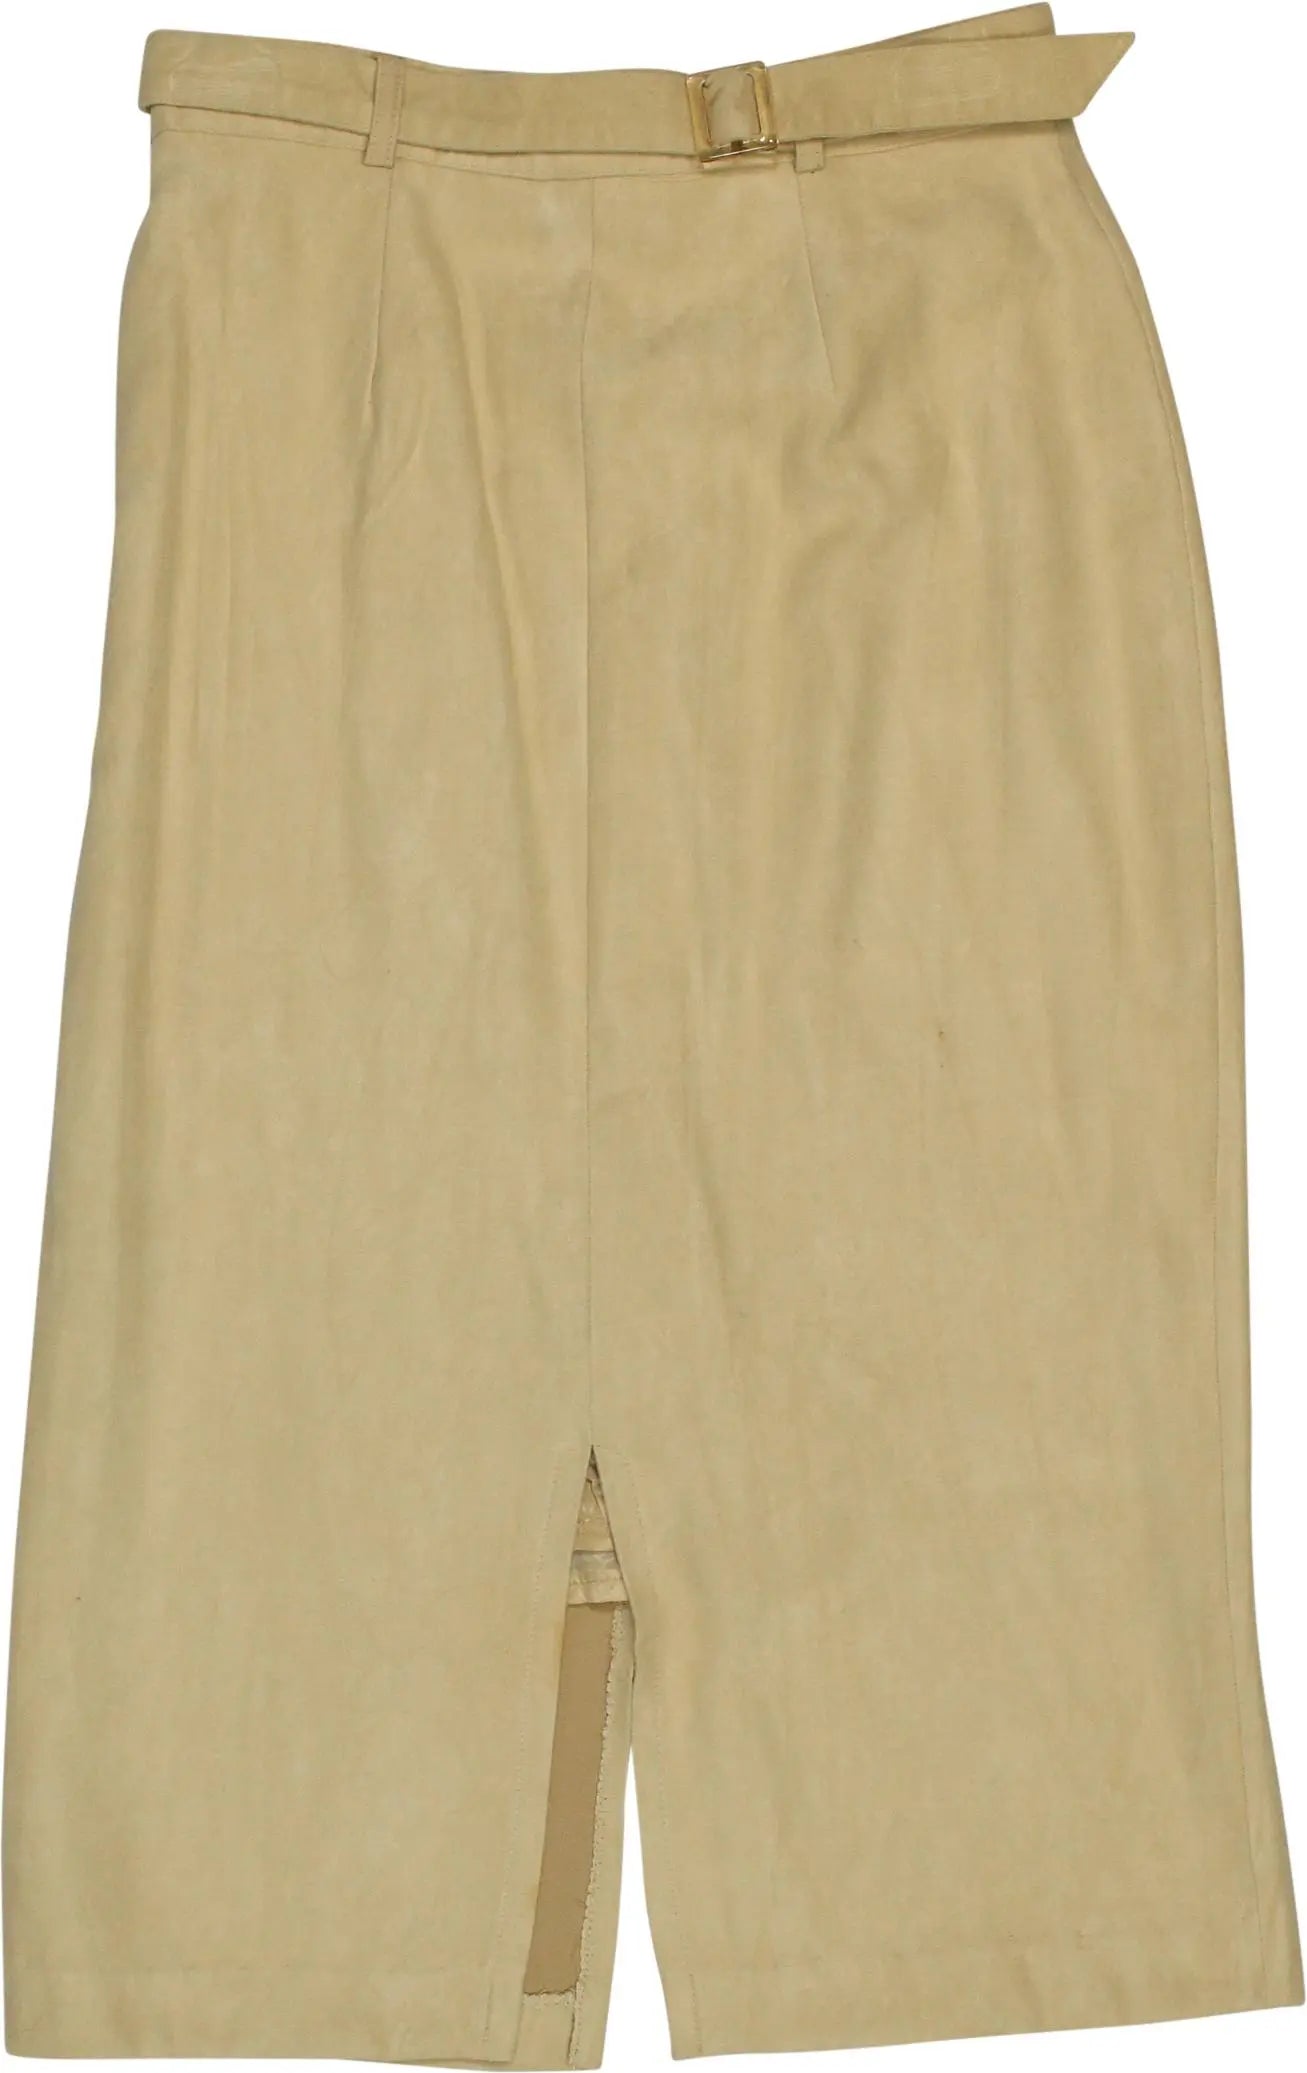 Miss Etam - Beige pencil skirt- ThriftTale.com - Vintage and second handclothing